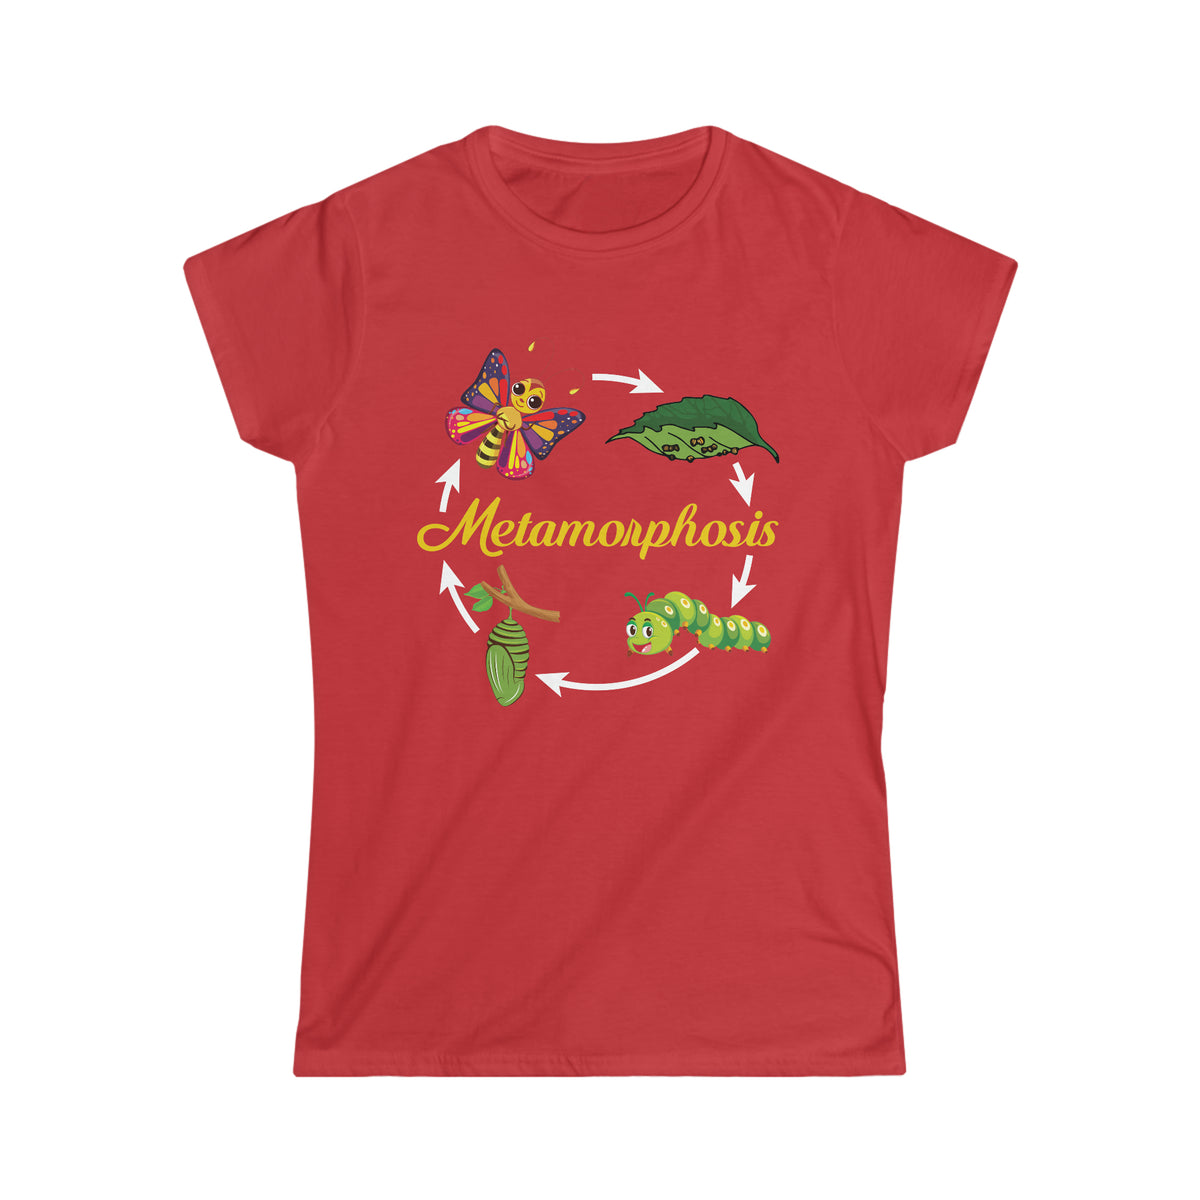 Metamorphosis Life Cycle Biology Shirts | Science Teacher Gifts  | Women's Softstyle Tee